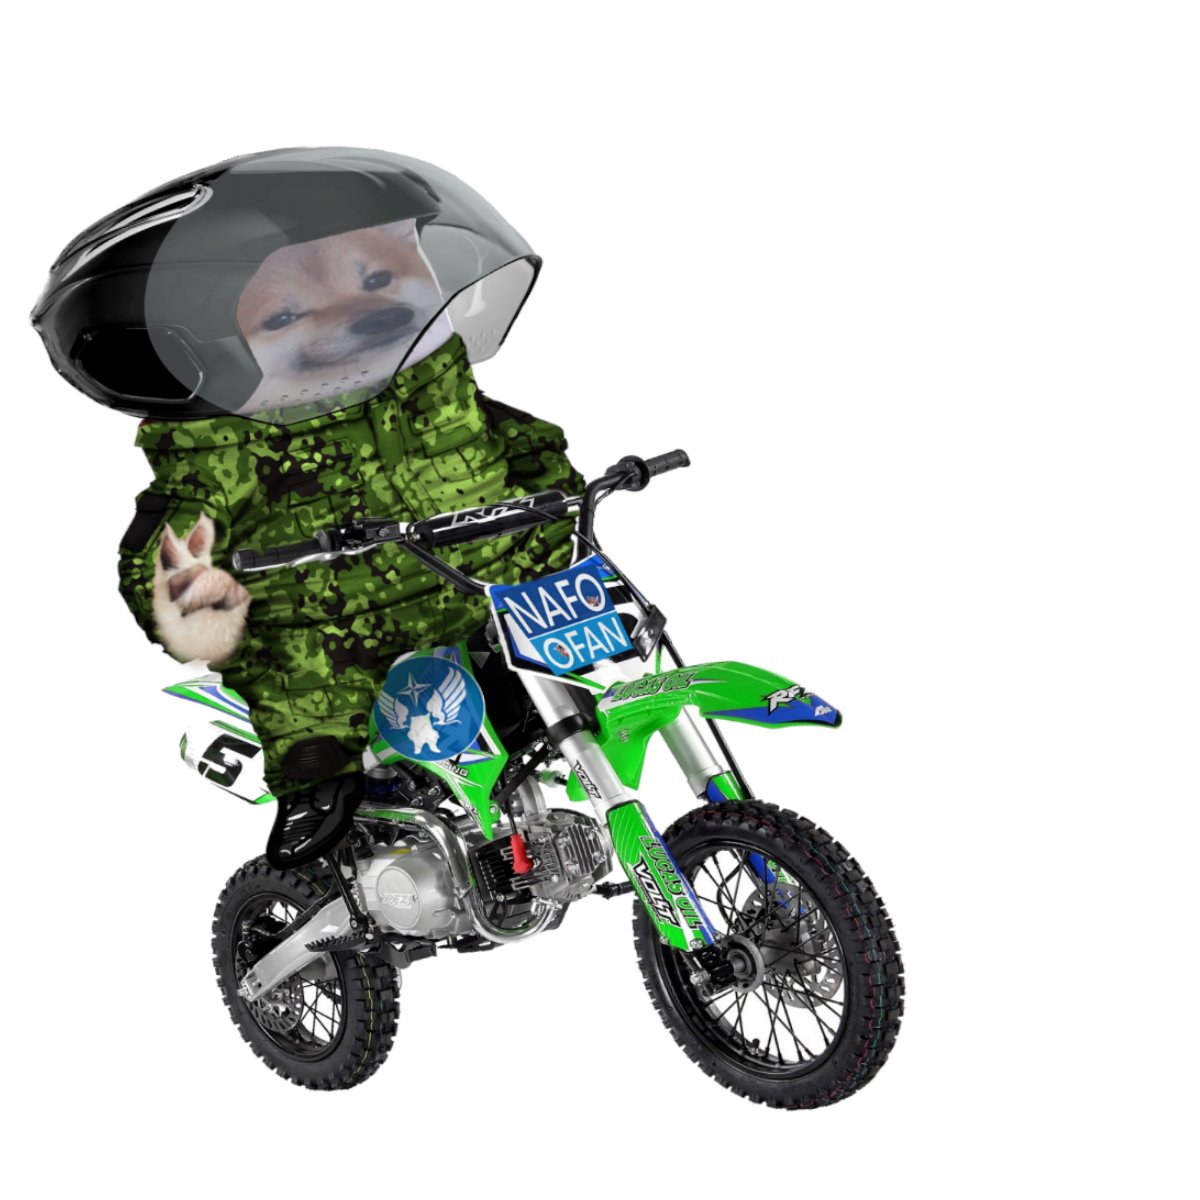 Email request for a green, dirt bike fella
#NAFO #NAFOfella #NAFOExpansionIsNonNegotiable